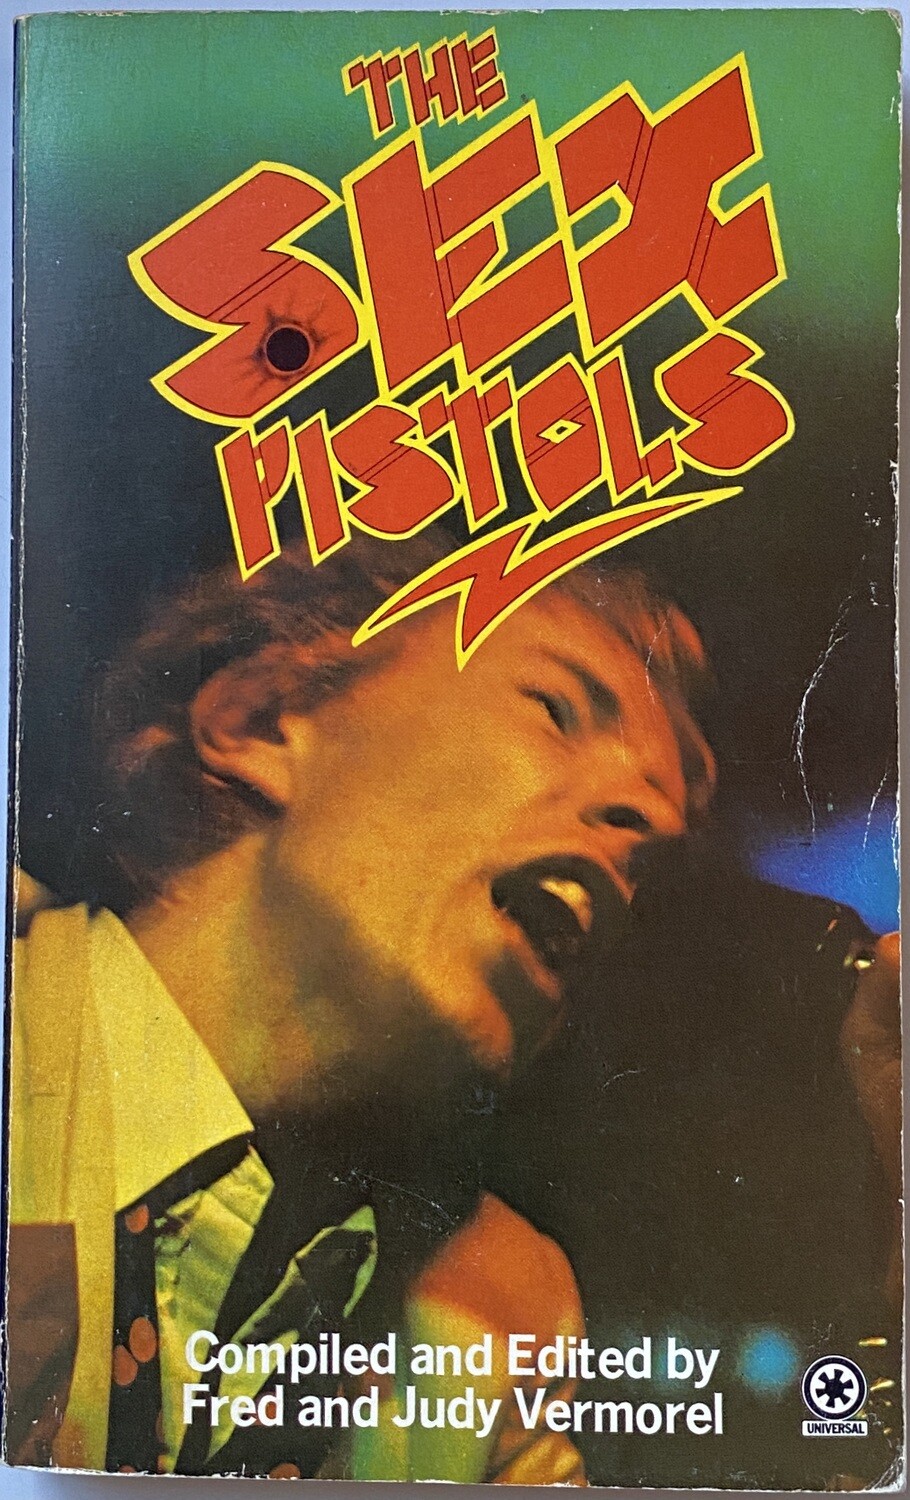 The Sex Pistols pic pic